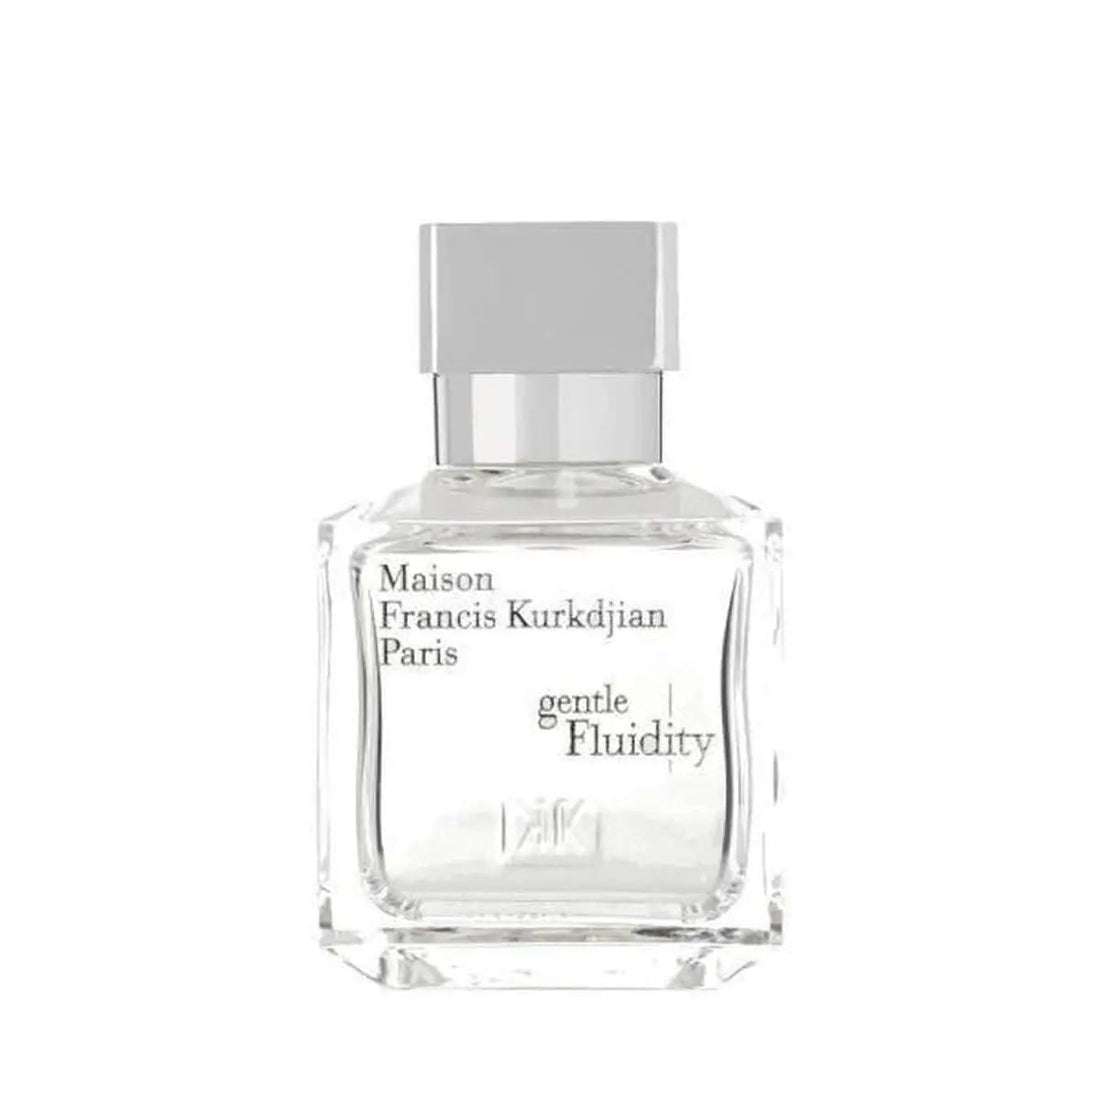 Maison francis kurkdjian عطر Gentle Fluidity Silver EDP 70 مل بدون ترويج للأفلام